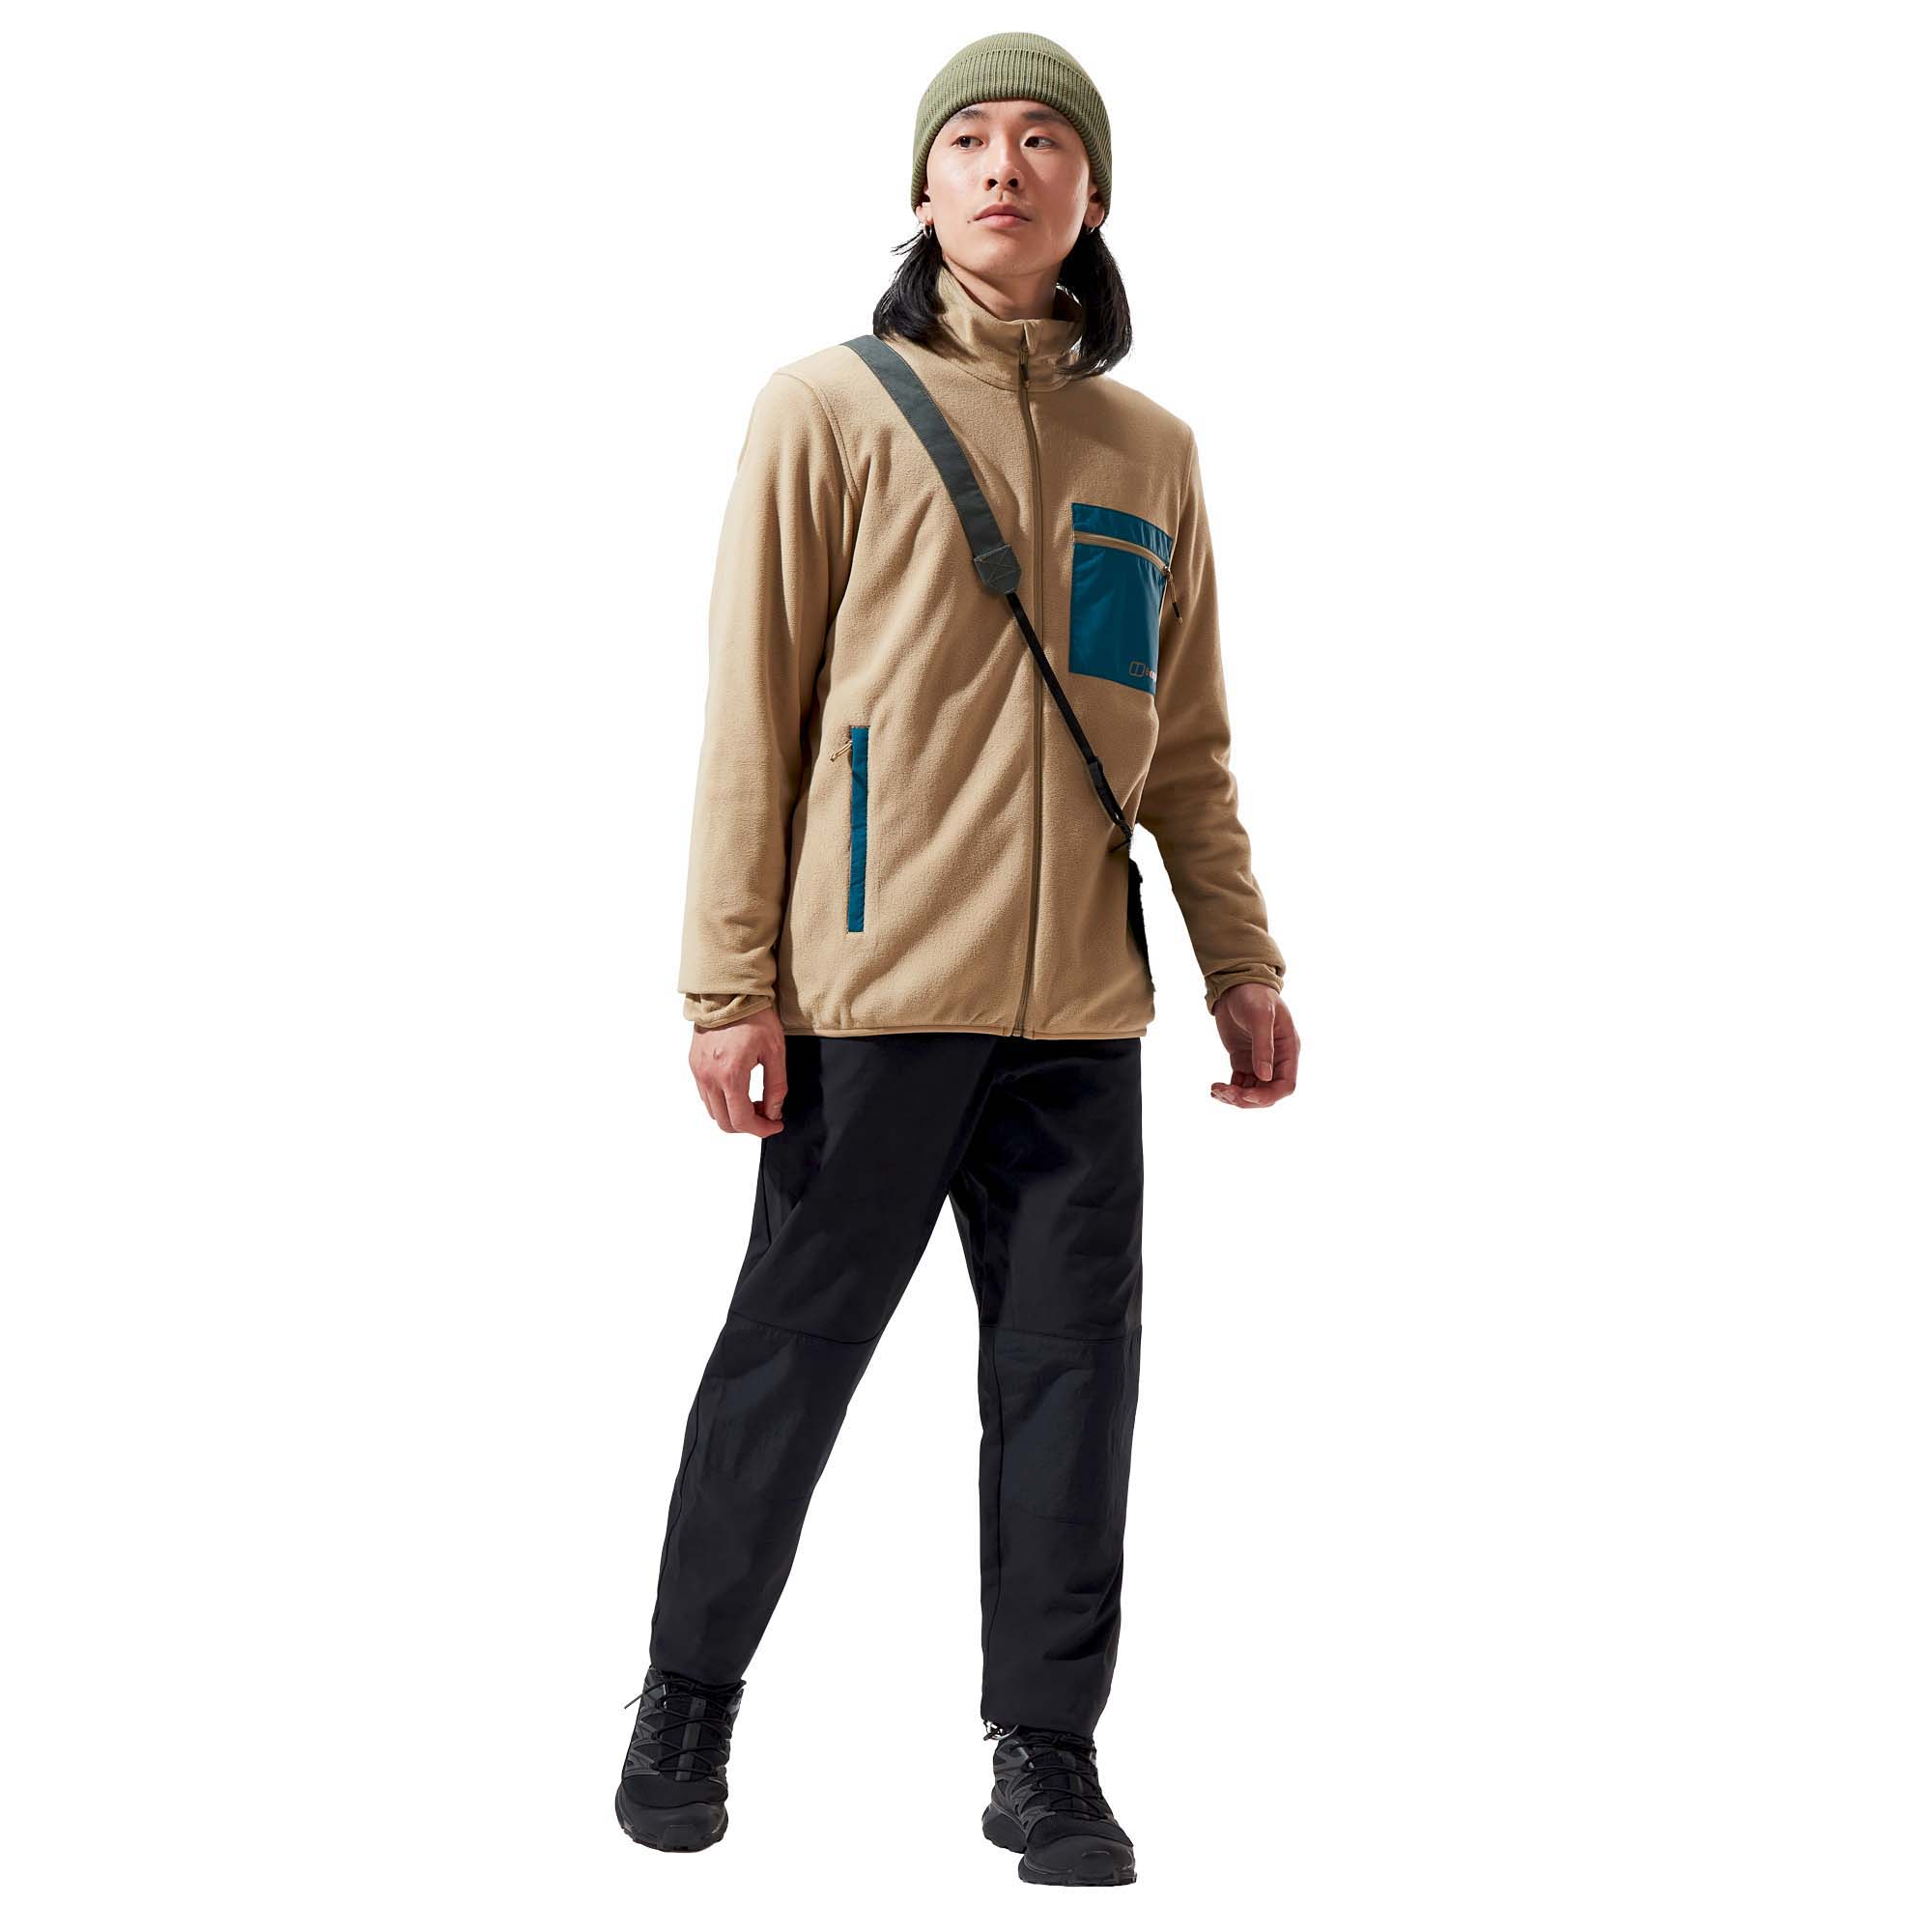 Berghaus Aslam Micro Fleece Full-Zip Jacket